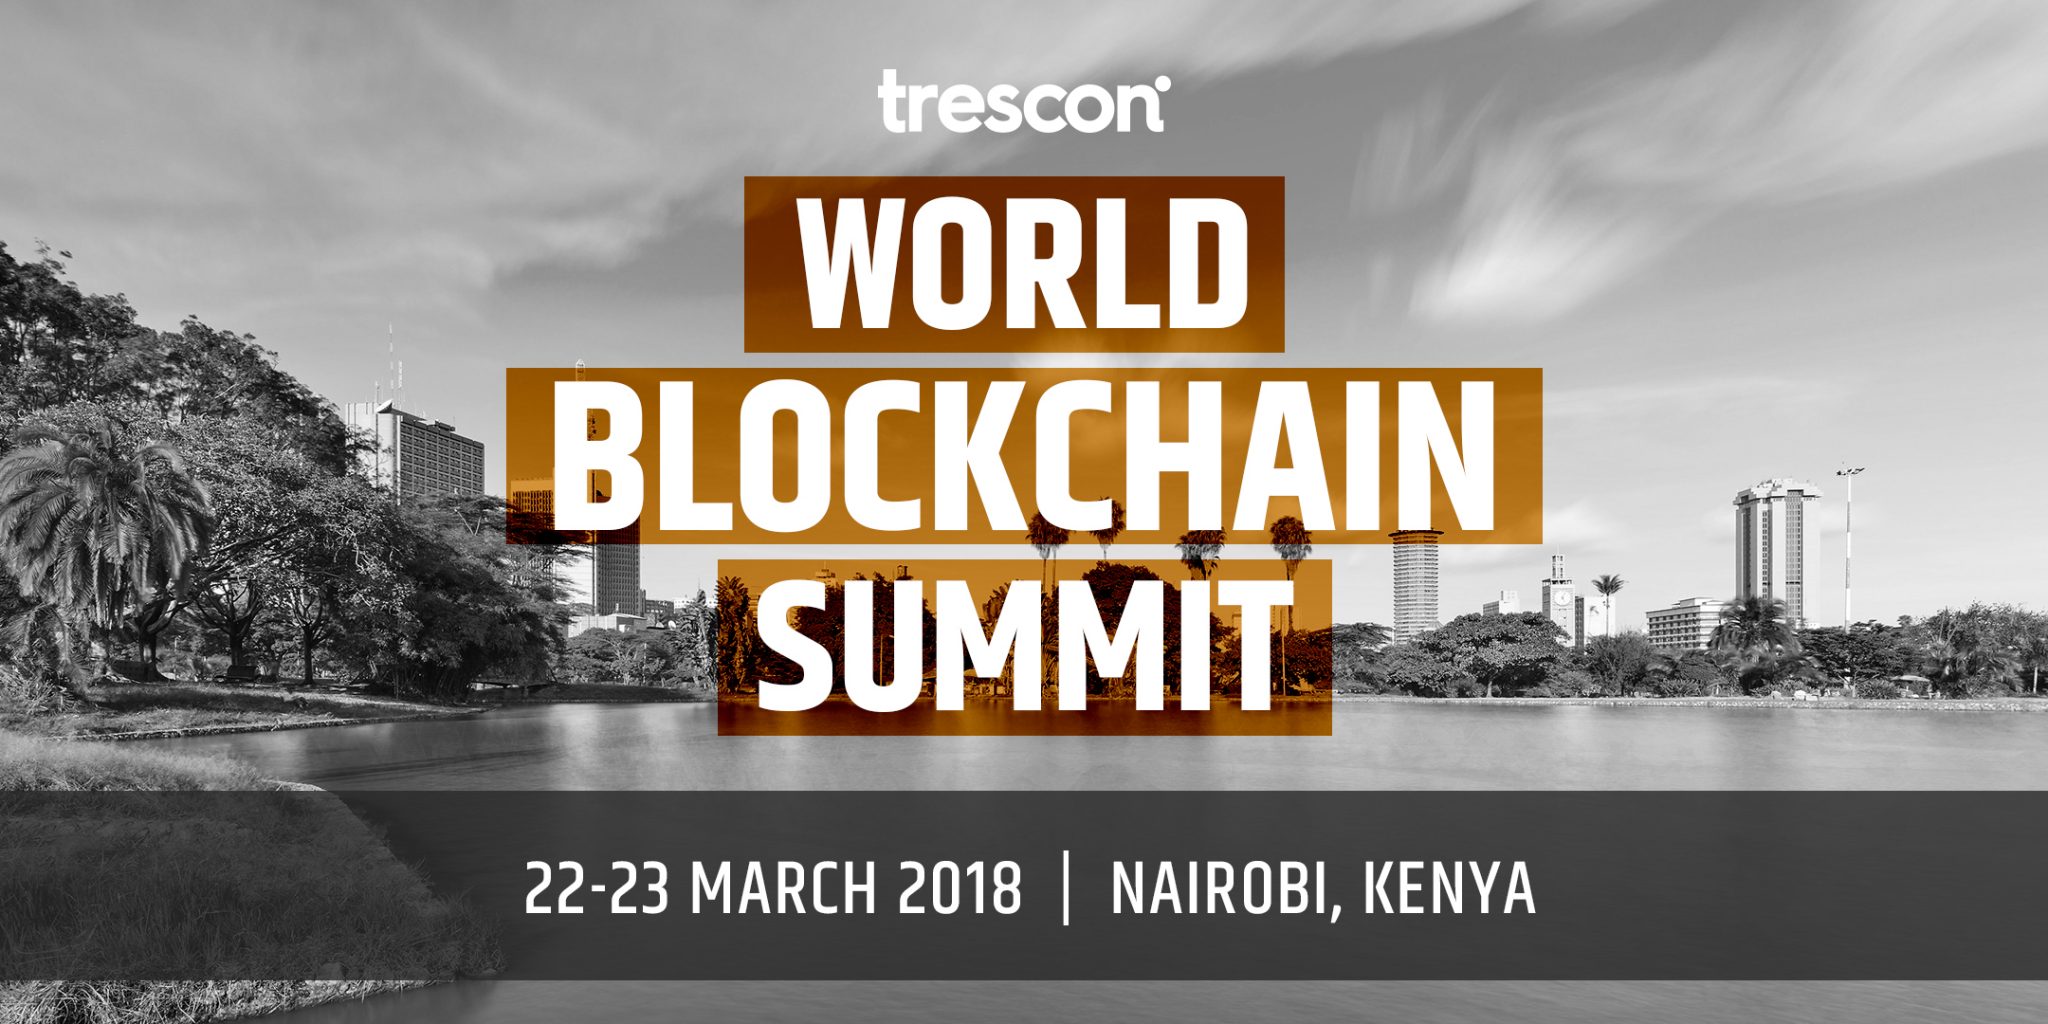 Only six days left to the World Blockchain Summit Series in Nairobi